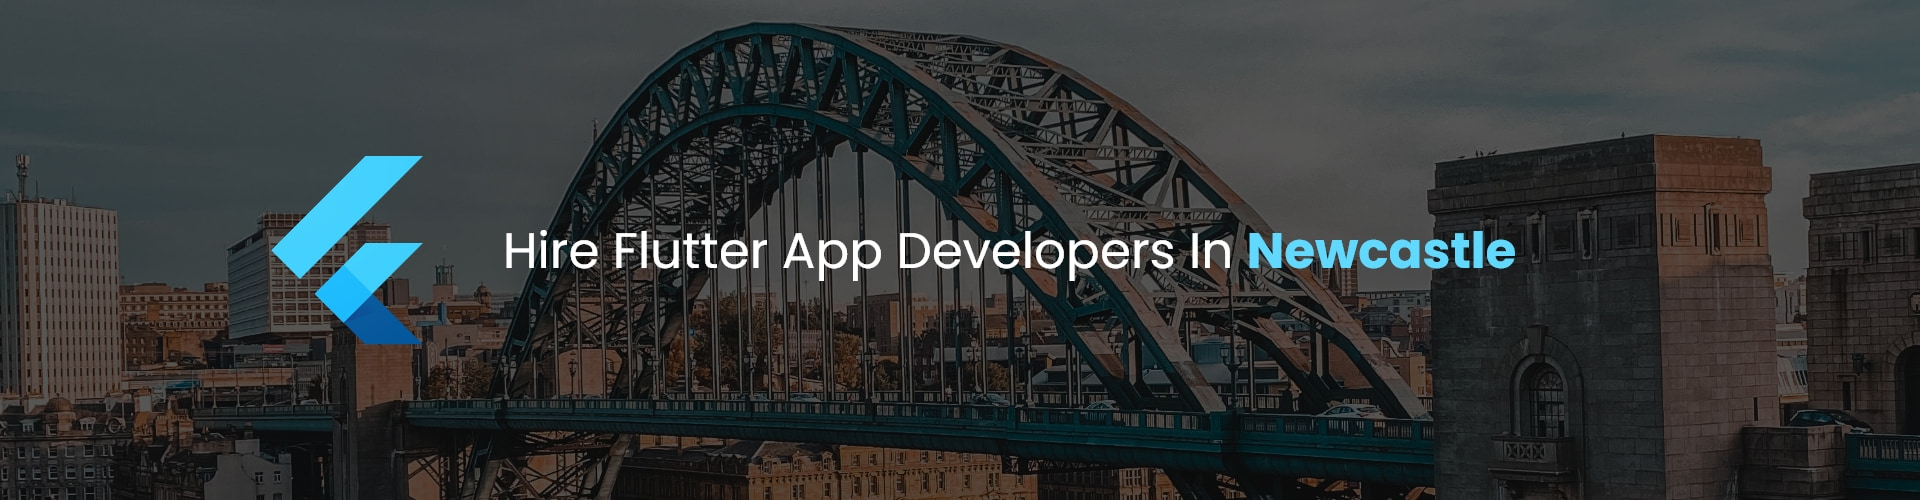 hire flutter app developers in newcastle